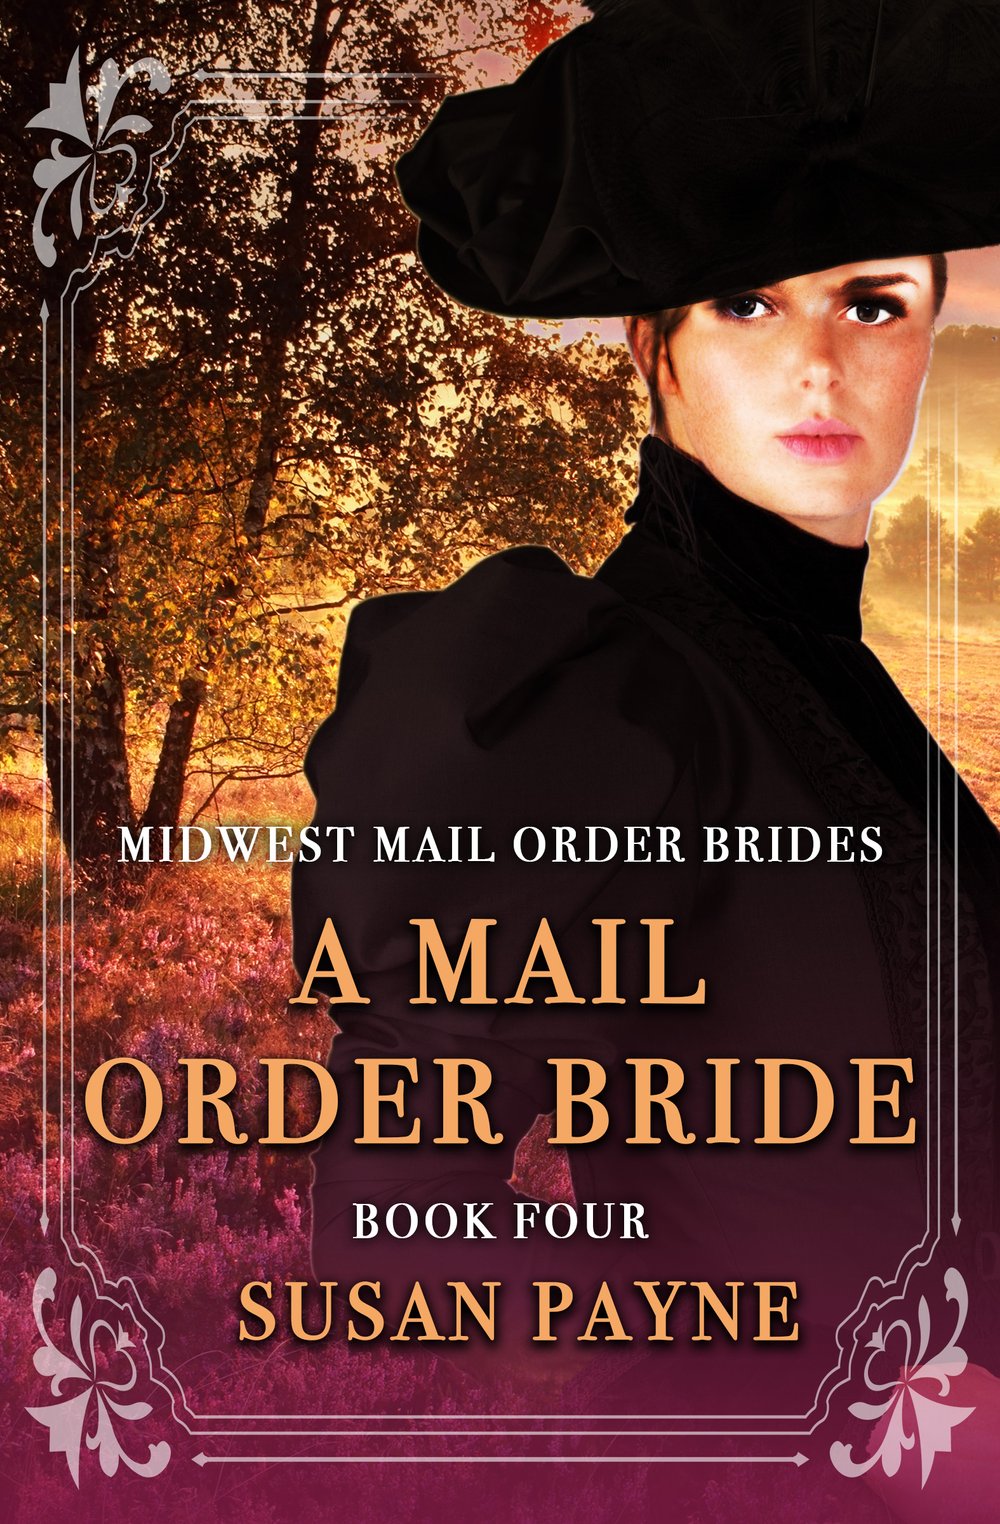 B4 - A Mail Order Bride (1).jpg